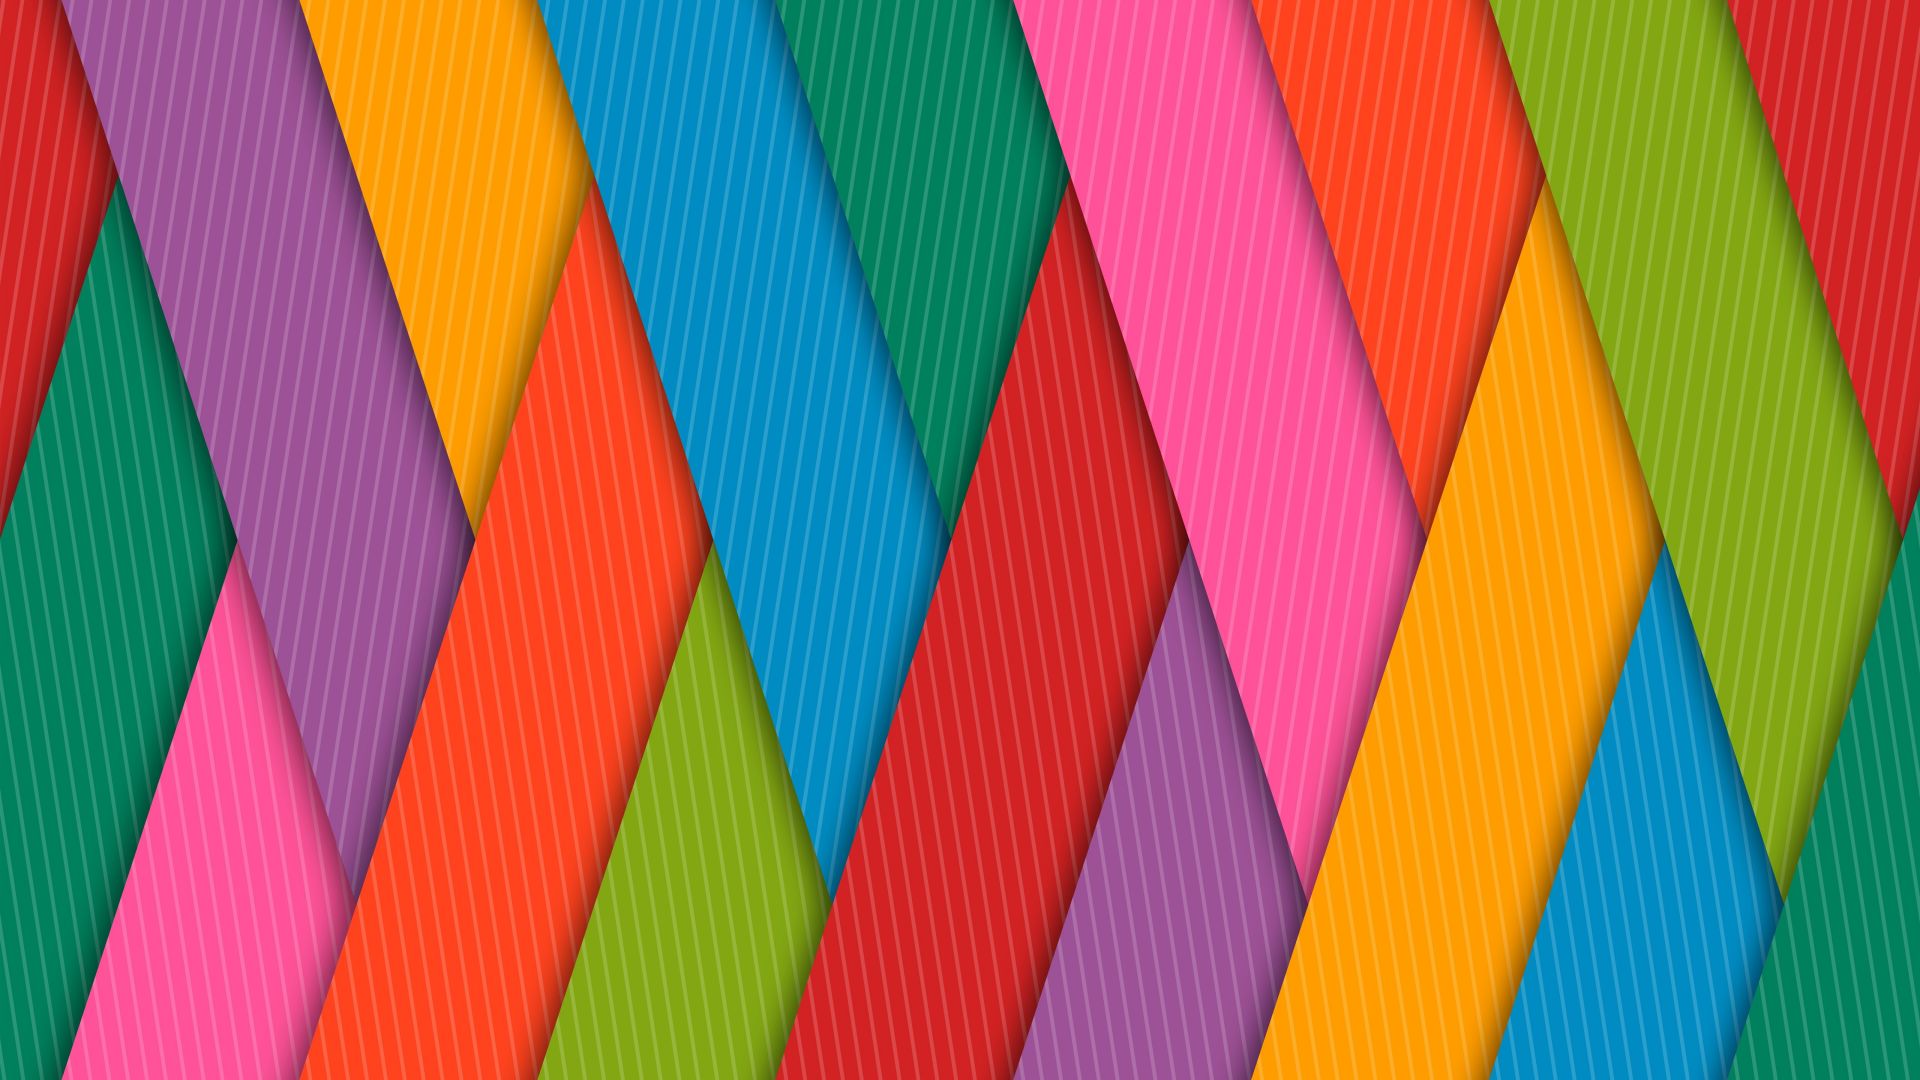 Цветные полосы, андроид обои, 4k, 5k, фон, Colorful Strips, 4k, 5k wallpaper, android wallpaper (horizontal)